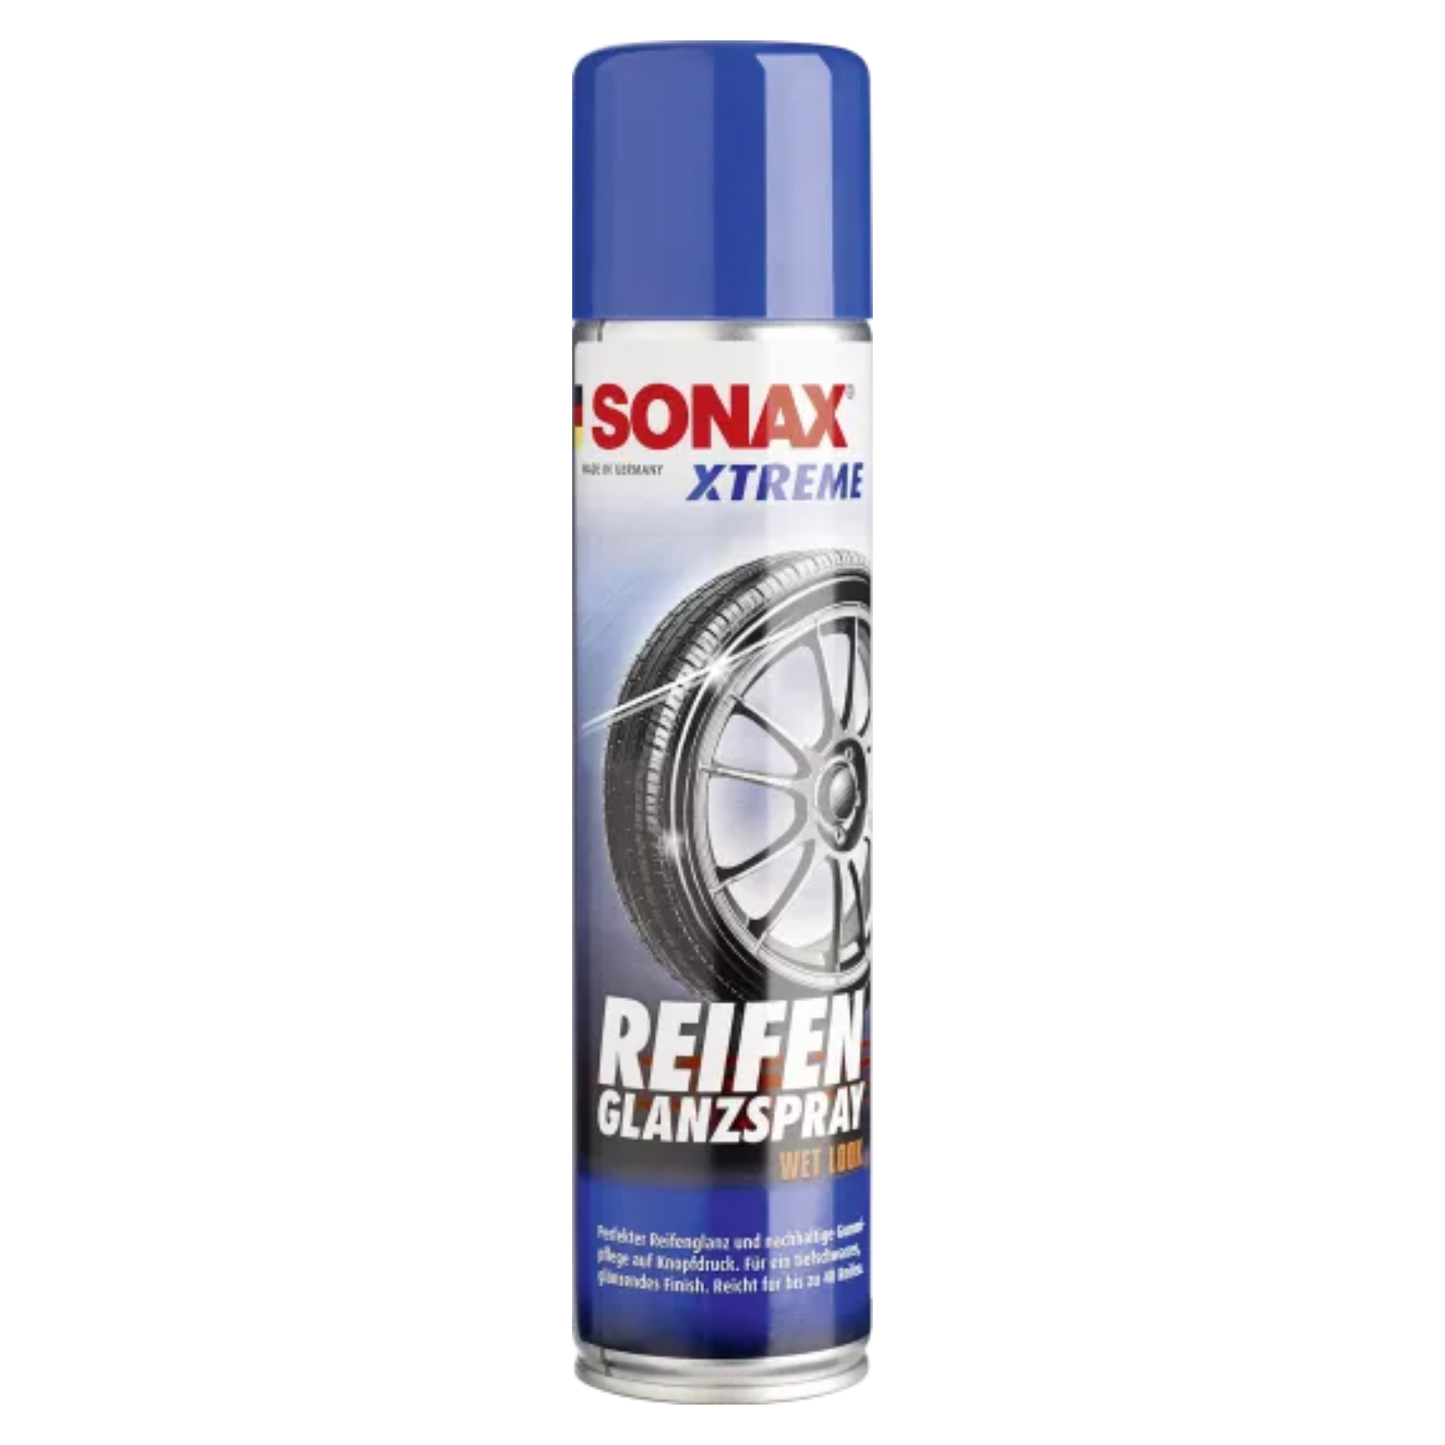 SONAX XTREME Reifenglanzspray Wet Look - 400ml